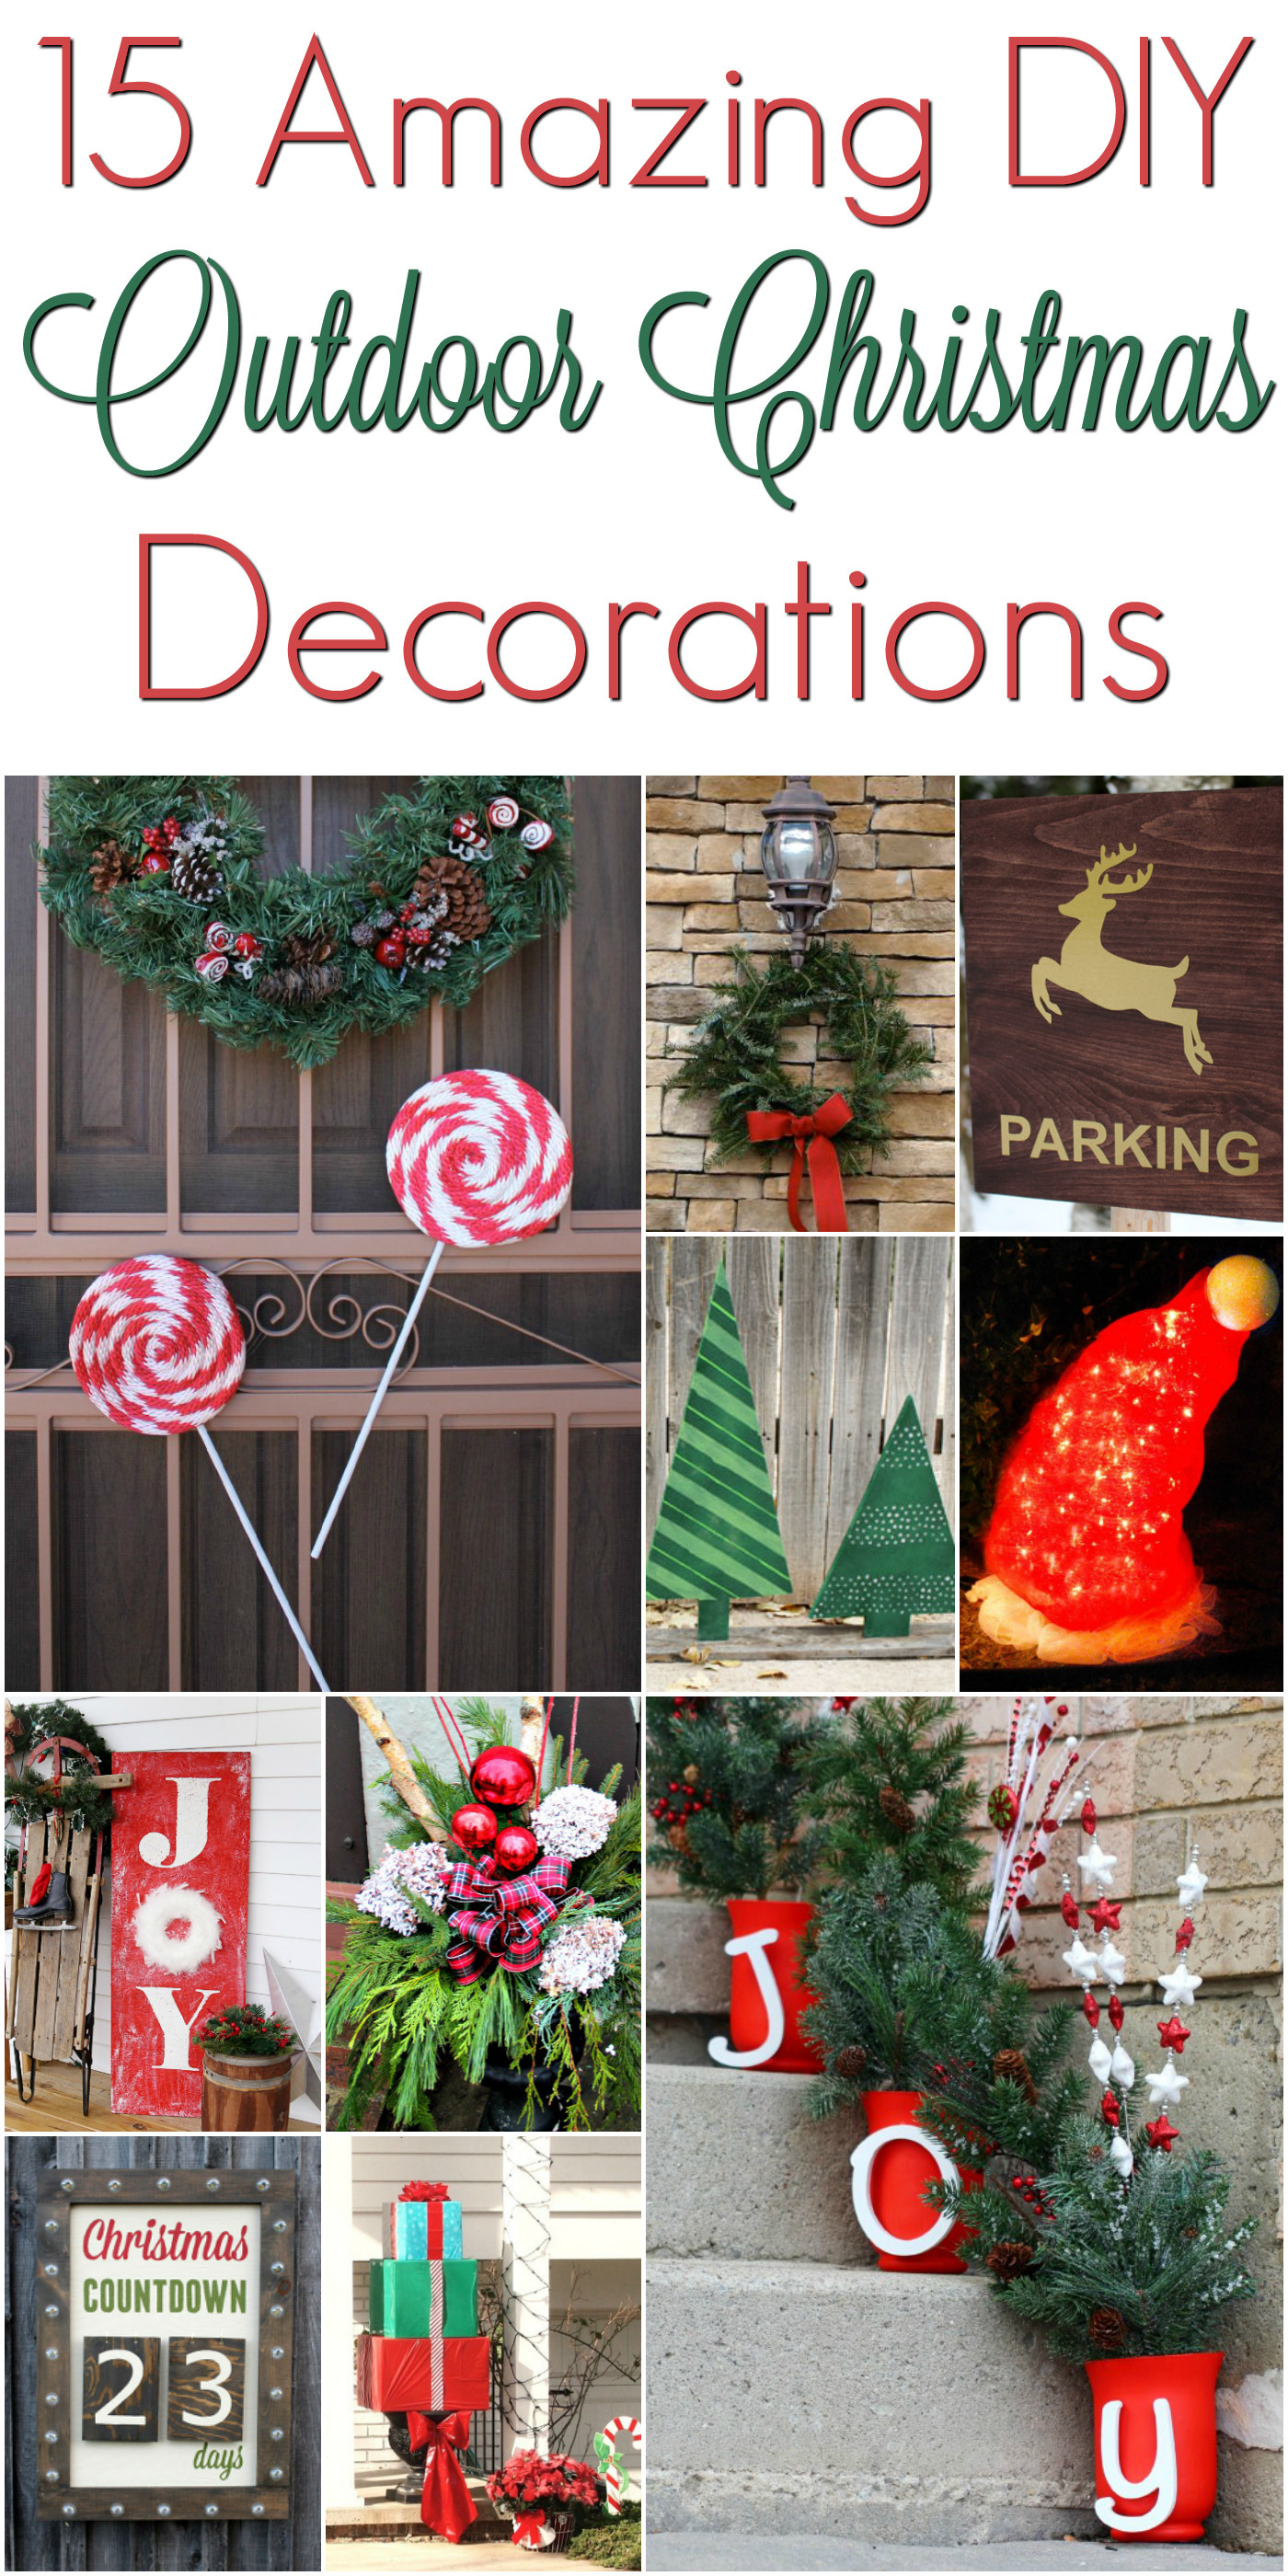 Outdoor Christmas Decorations DIY
 DIY Christmas Outdoor Decorations ChristmasDecorations